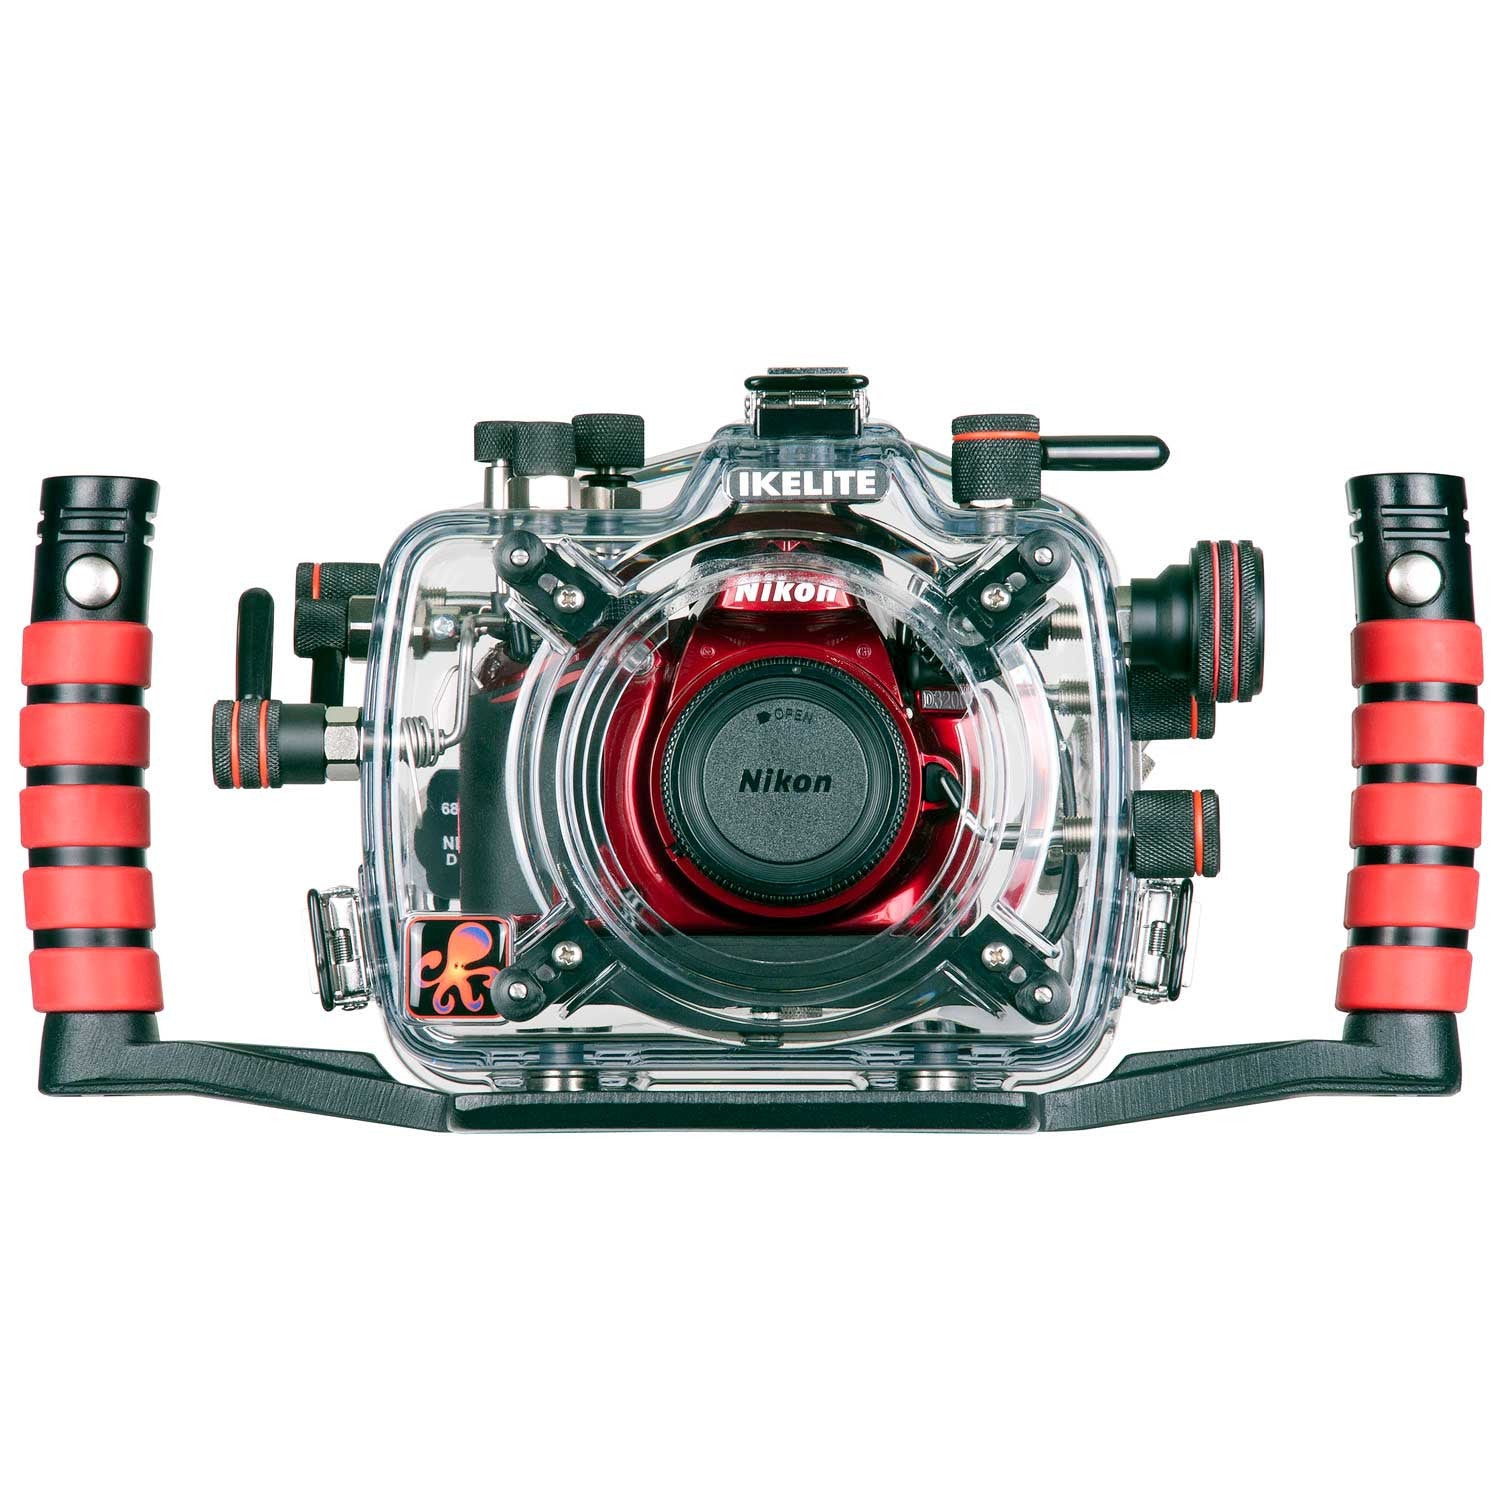 200FL Underwater TTL Housing for Nikon D3200 DSLR Cameras